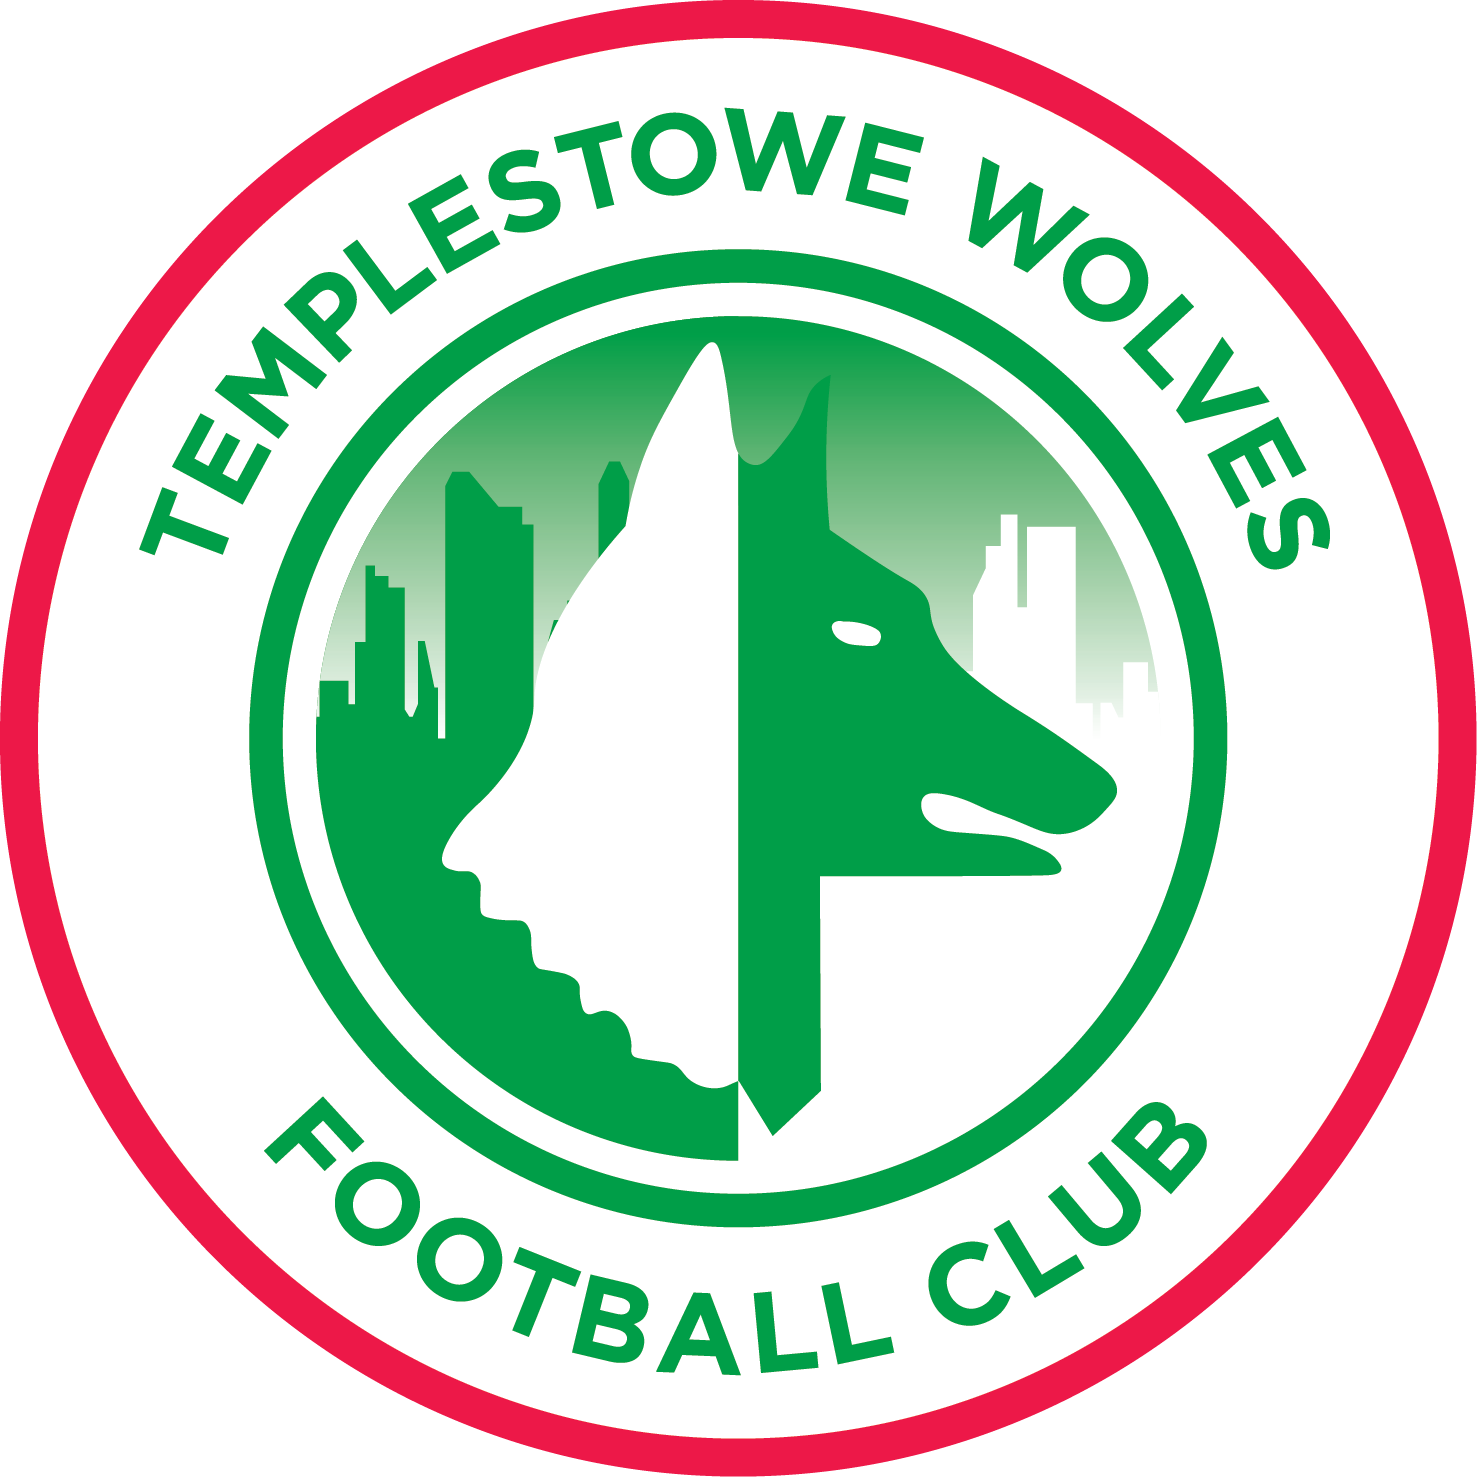 templestowe wolves football club logo